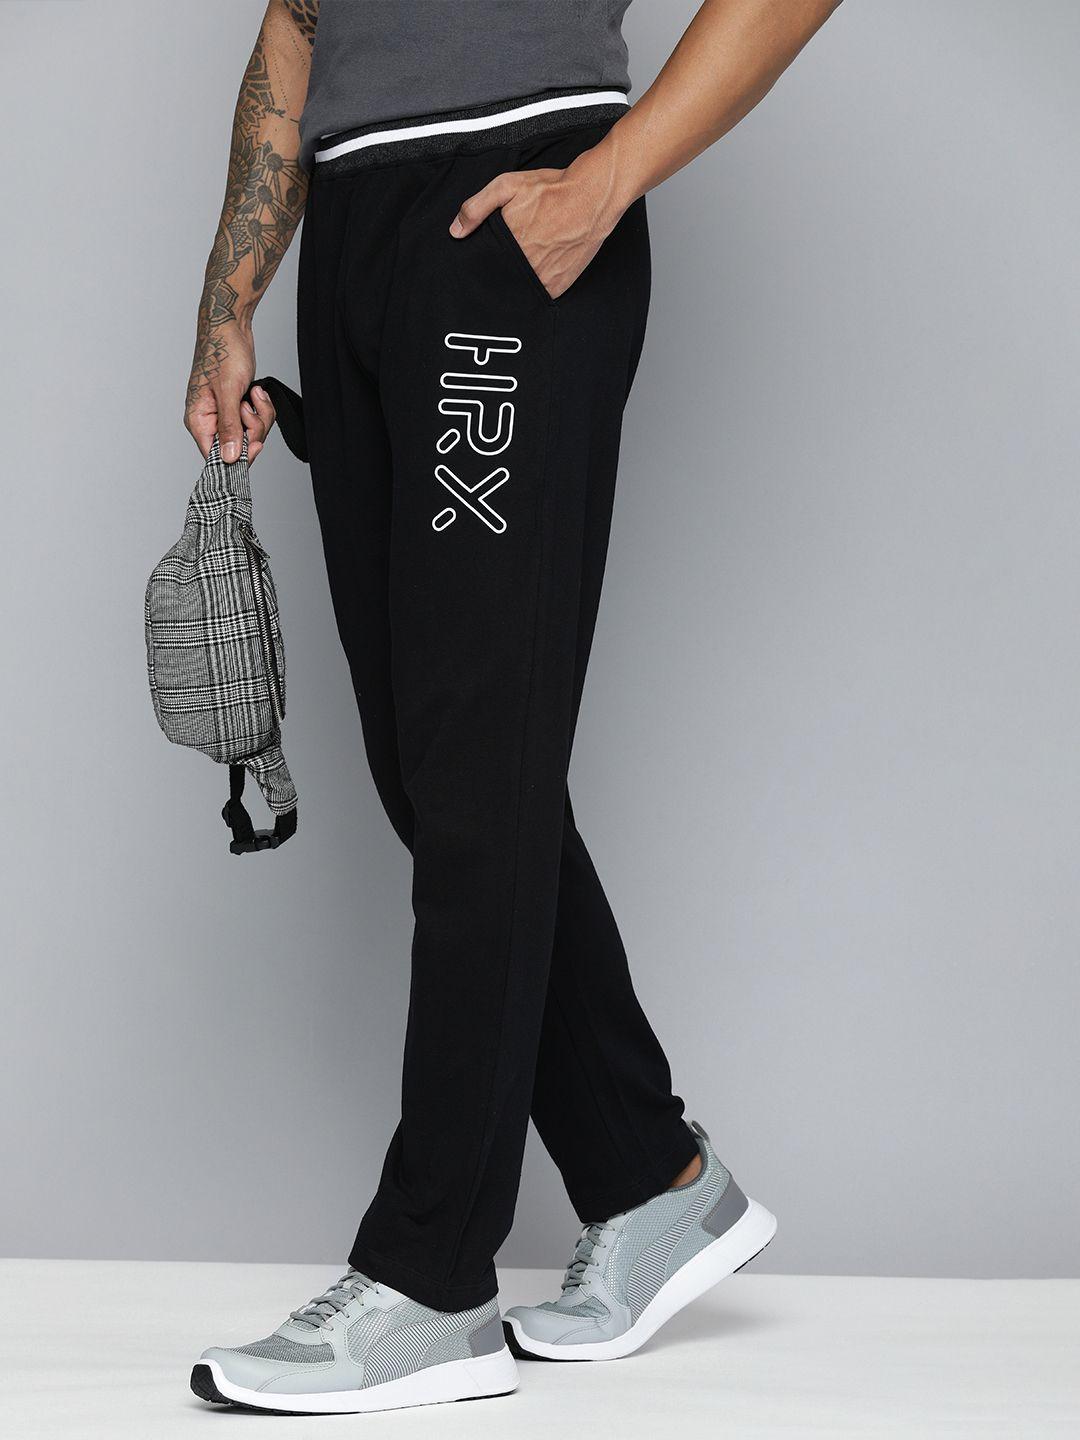 hrx-by-hrithik-roshan-men-black-printed-detail-regular-fit-track-pants